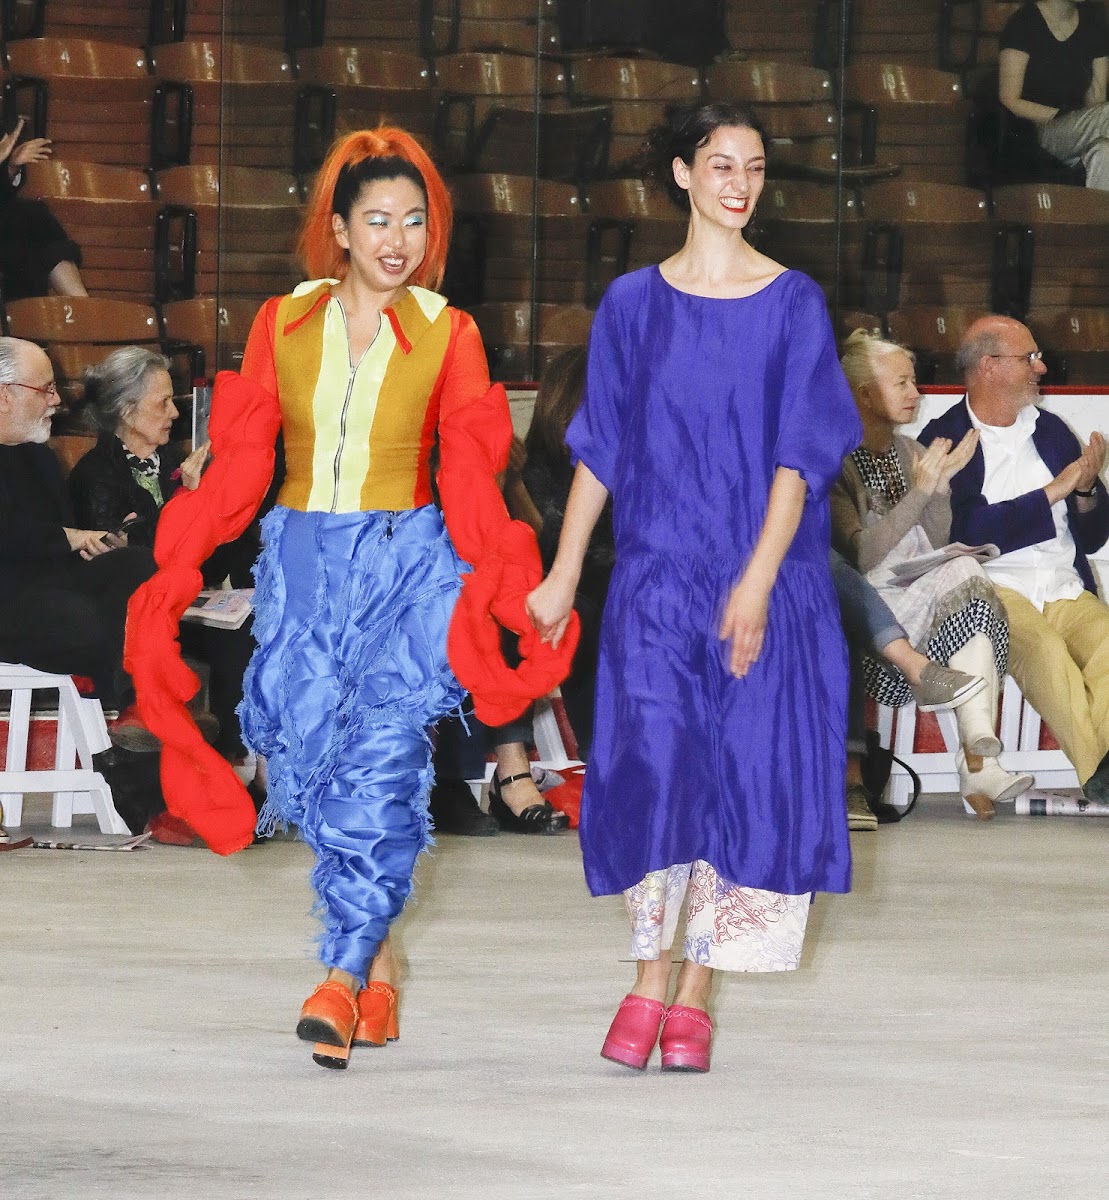 Designer Isabel Hajian 19 AP takes a celebratory runway walk with one of her models